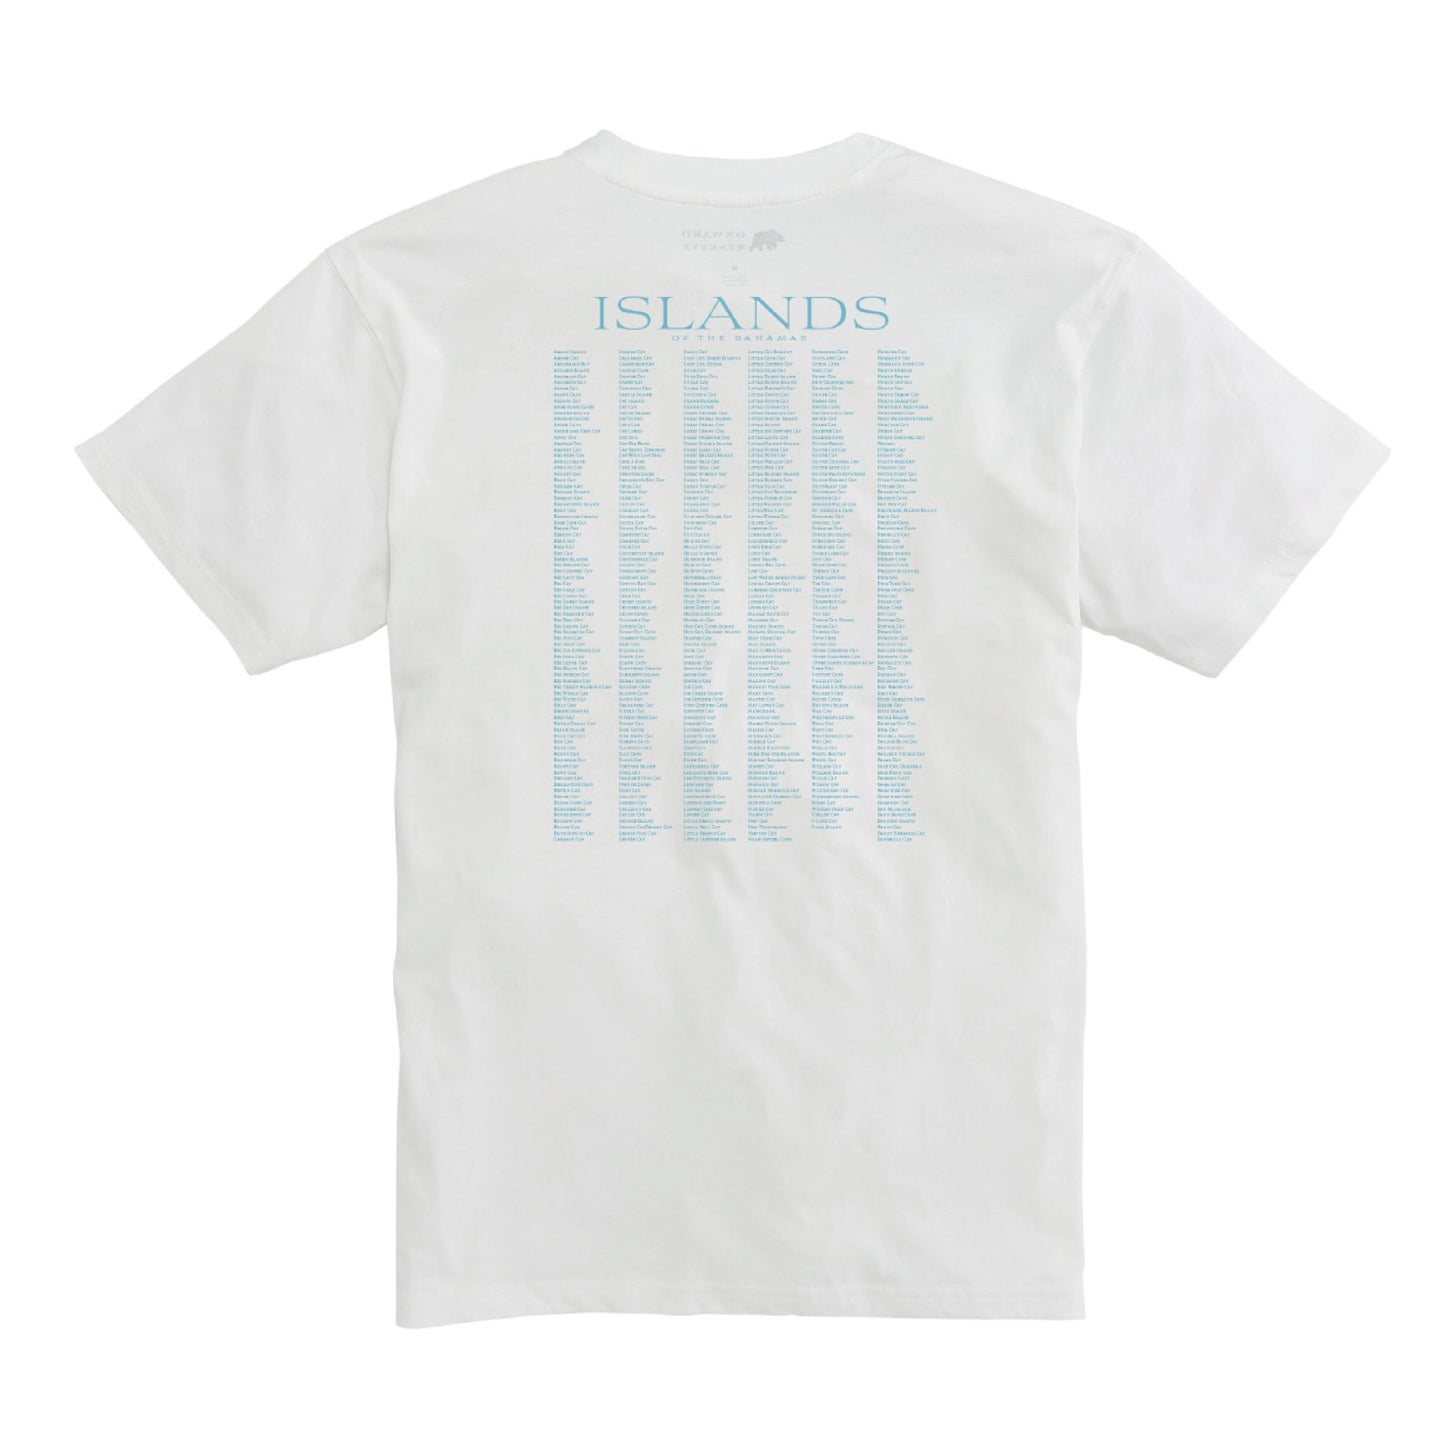 Islands of the Bahamas Tee - White